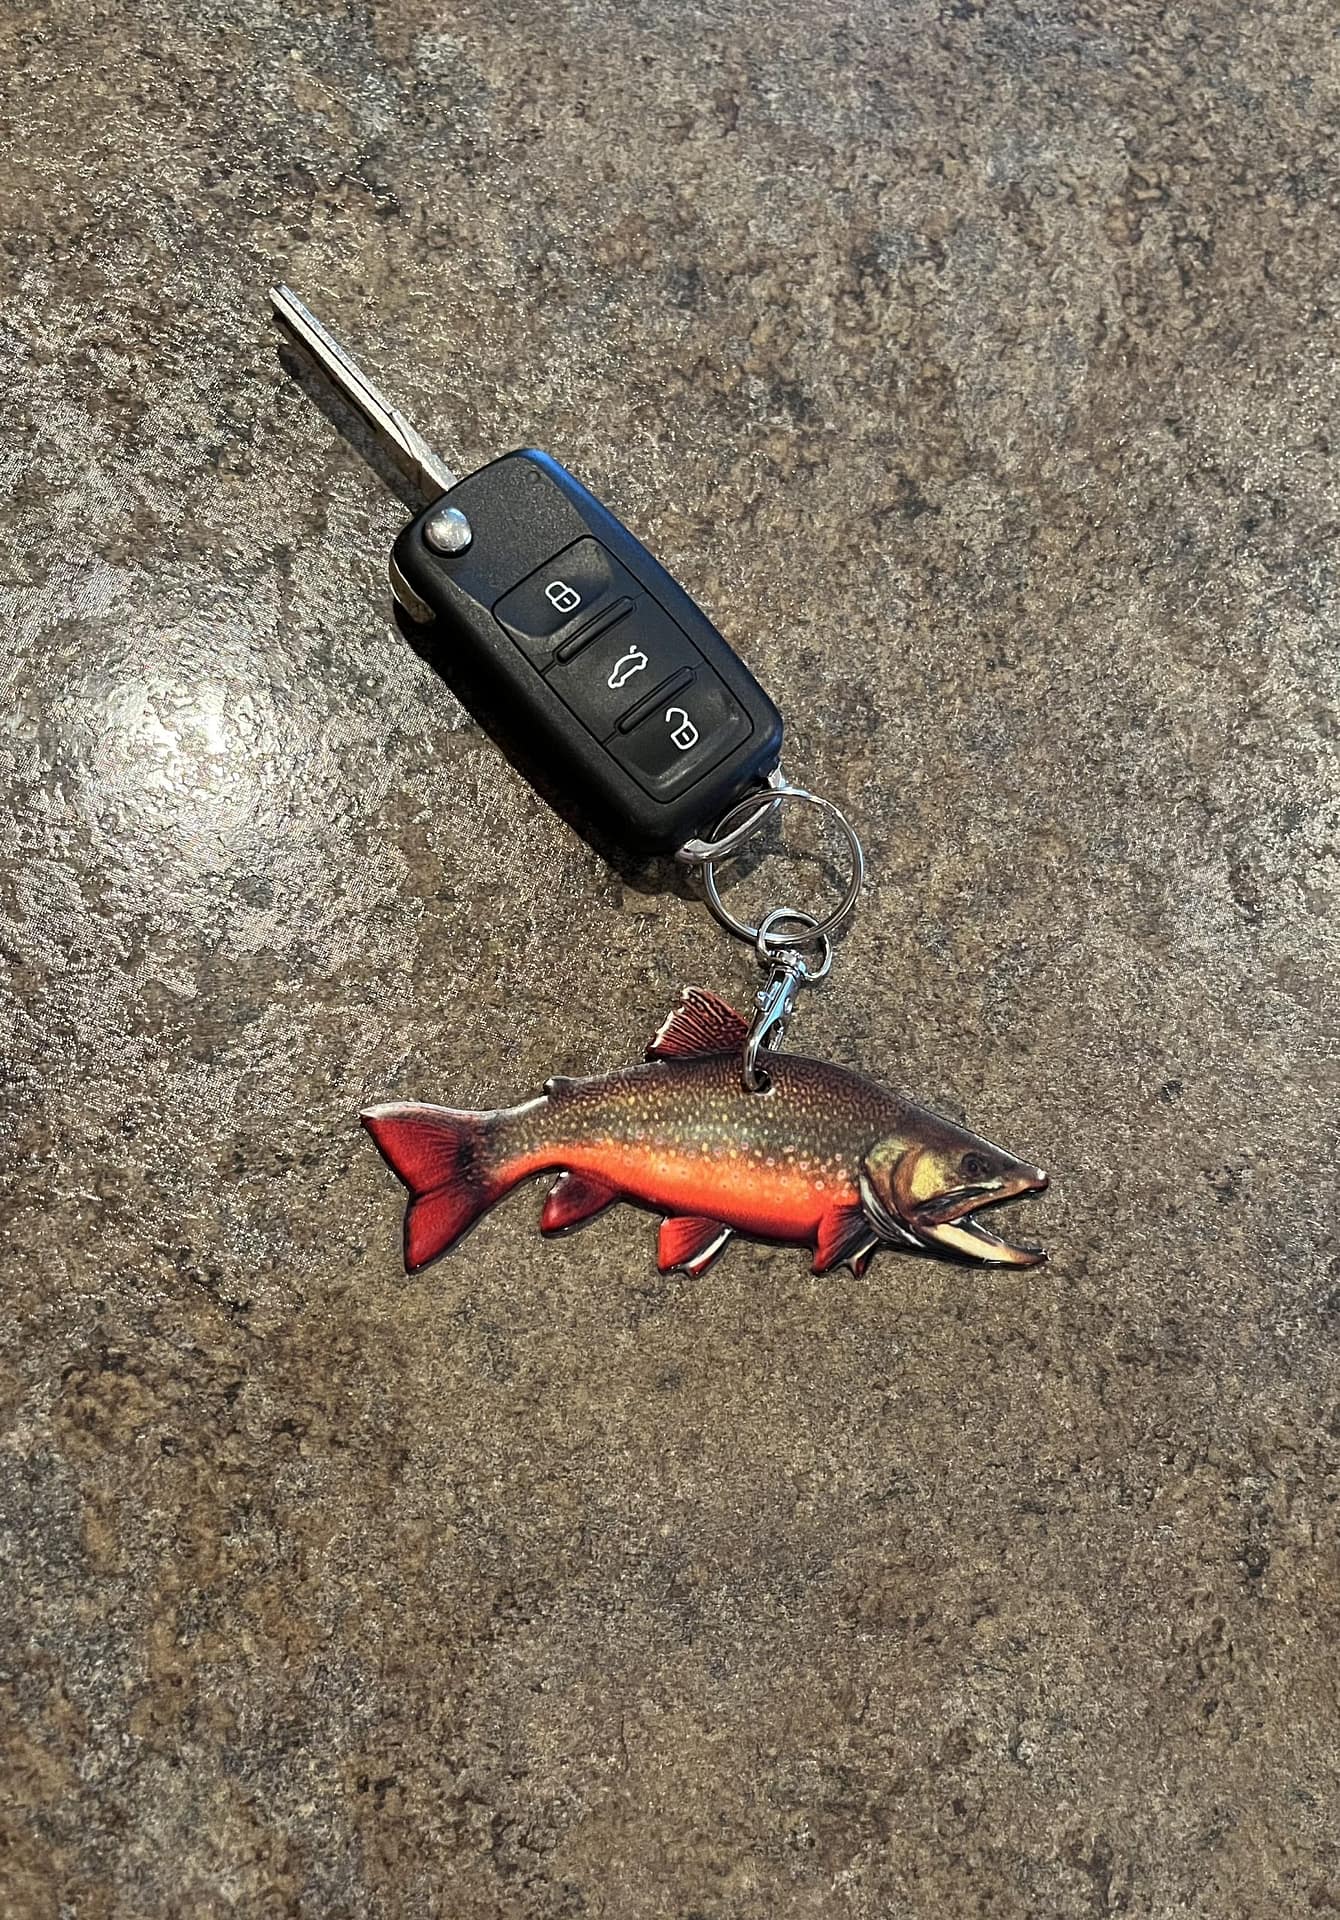 Brook Trout Fish Keychain